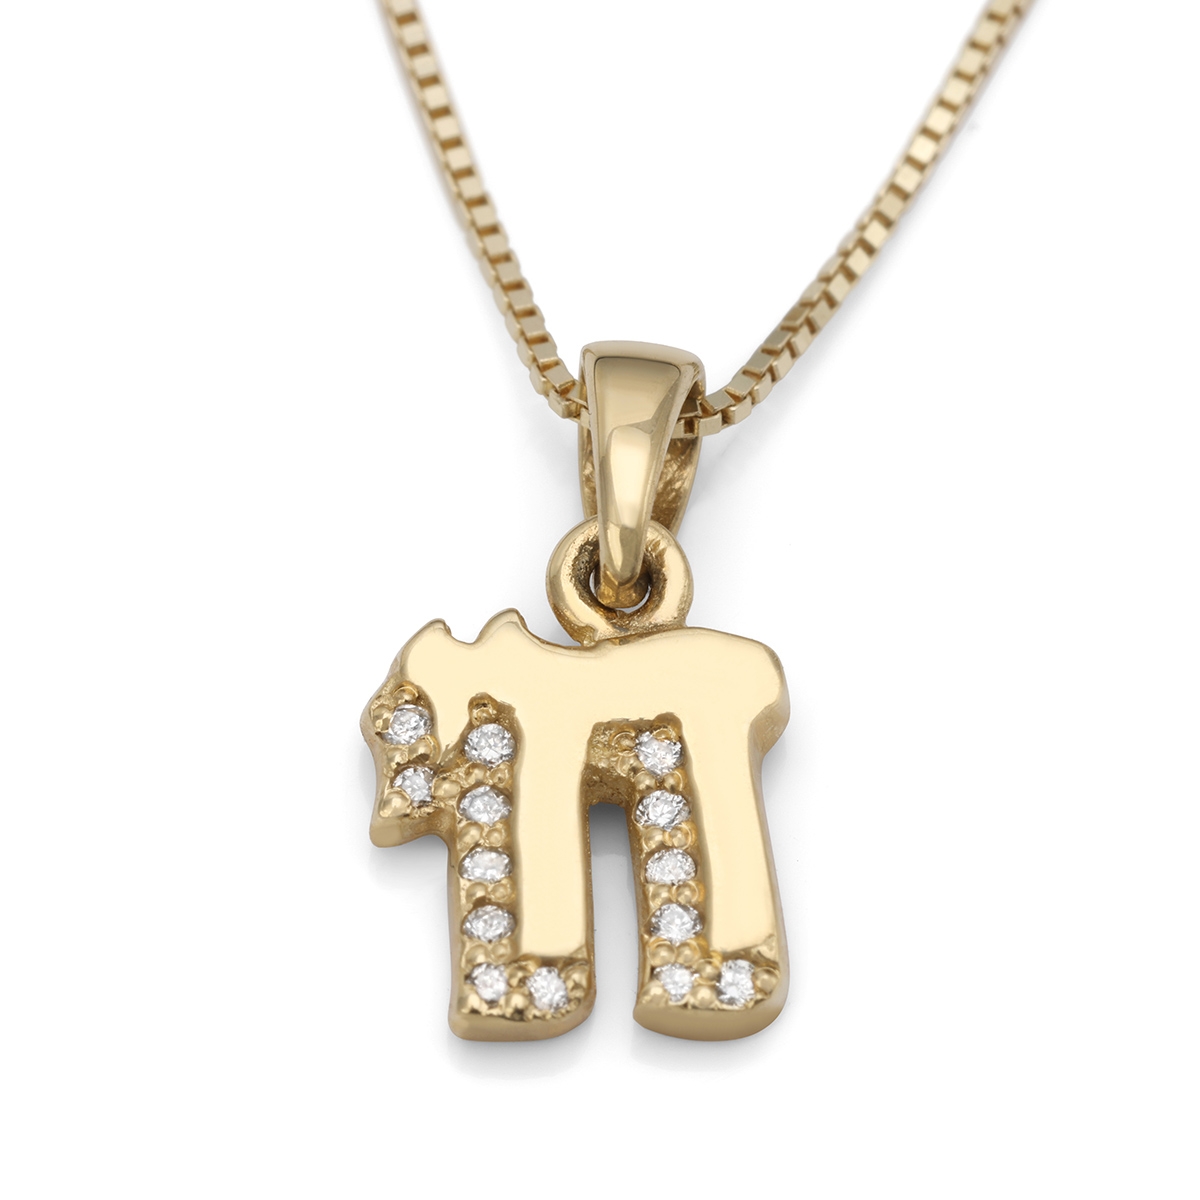 Petite 14K Gold Chai Pendant Necklace with Diamond 